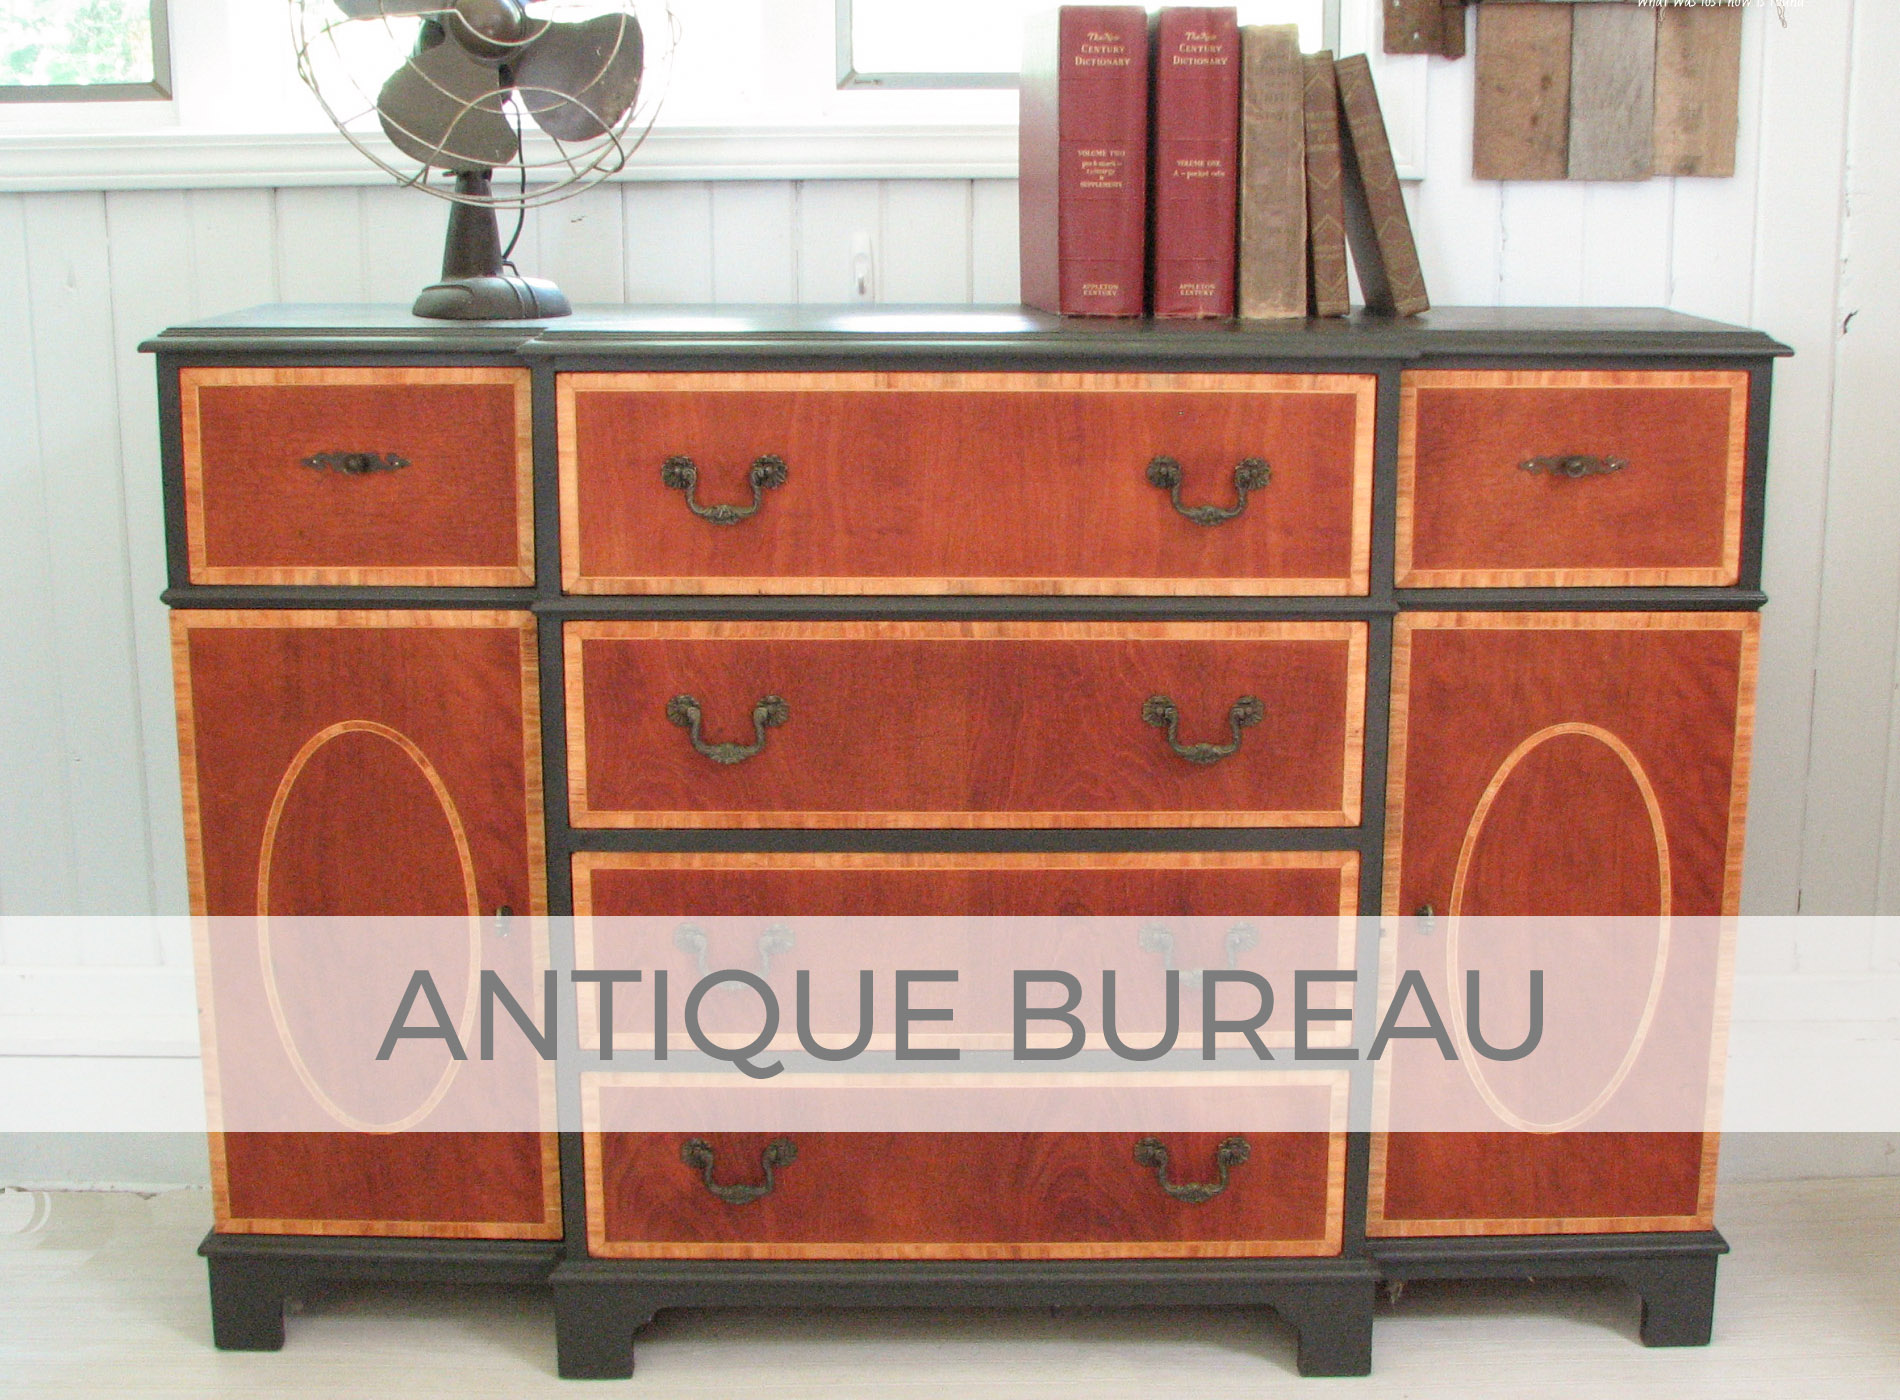 Antique Bureau by Larissa of Prodigal Pieces | prodigalpieces.com